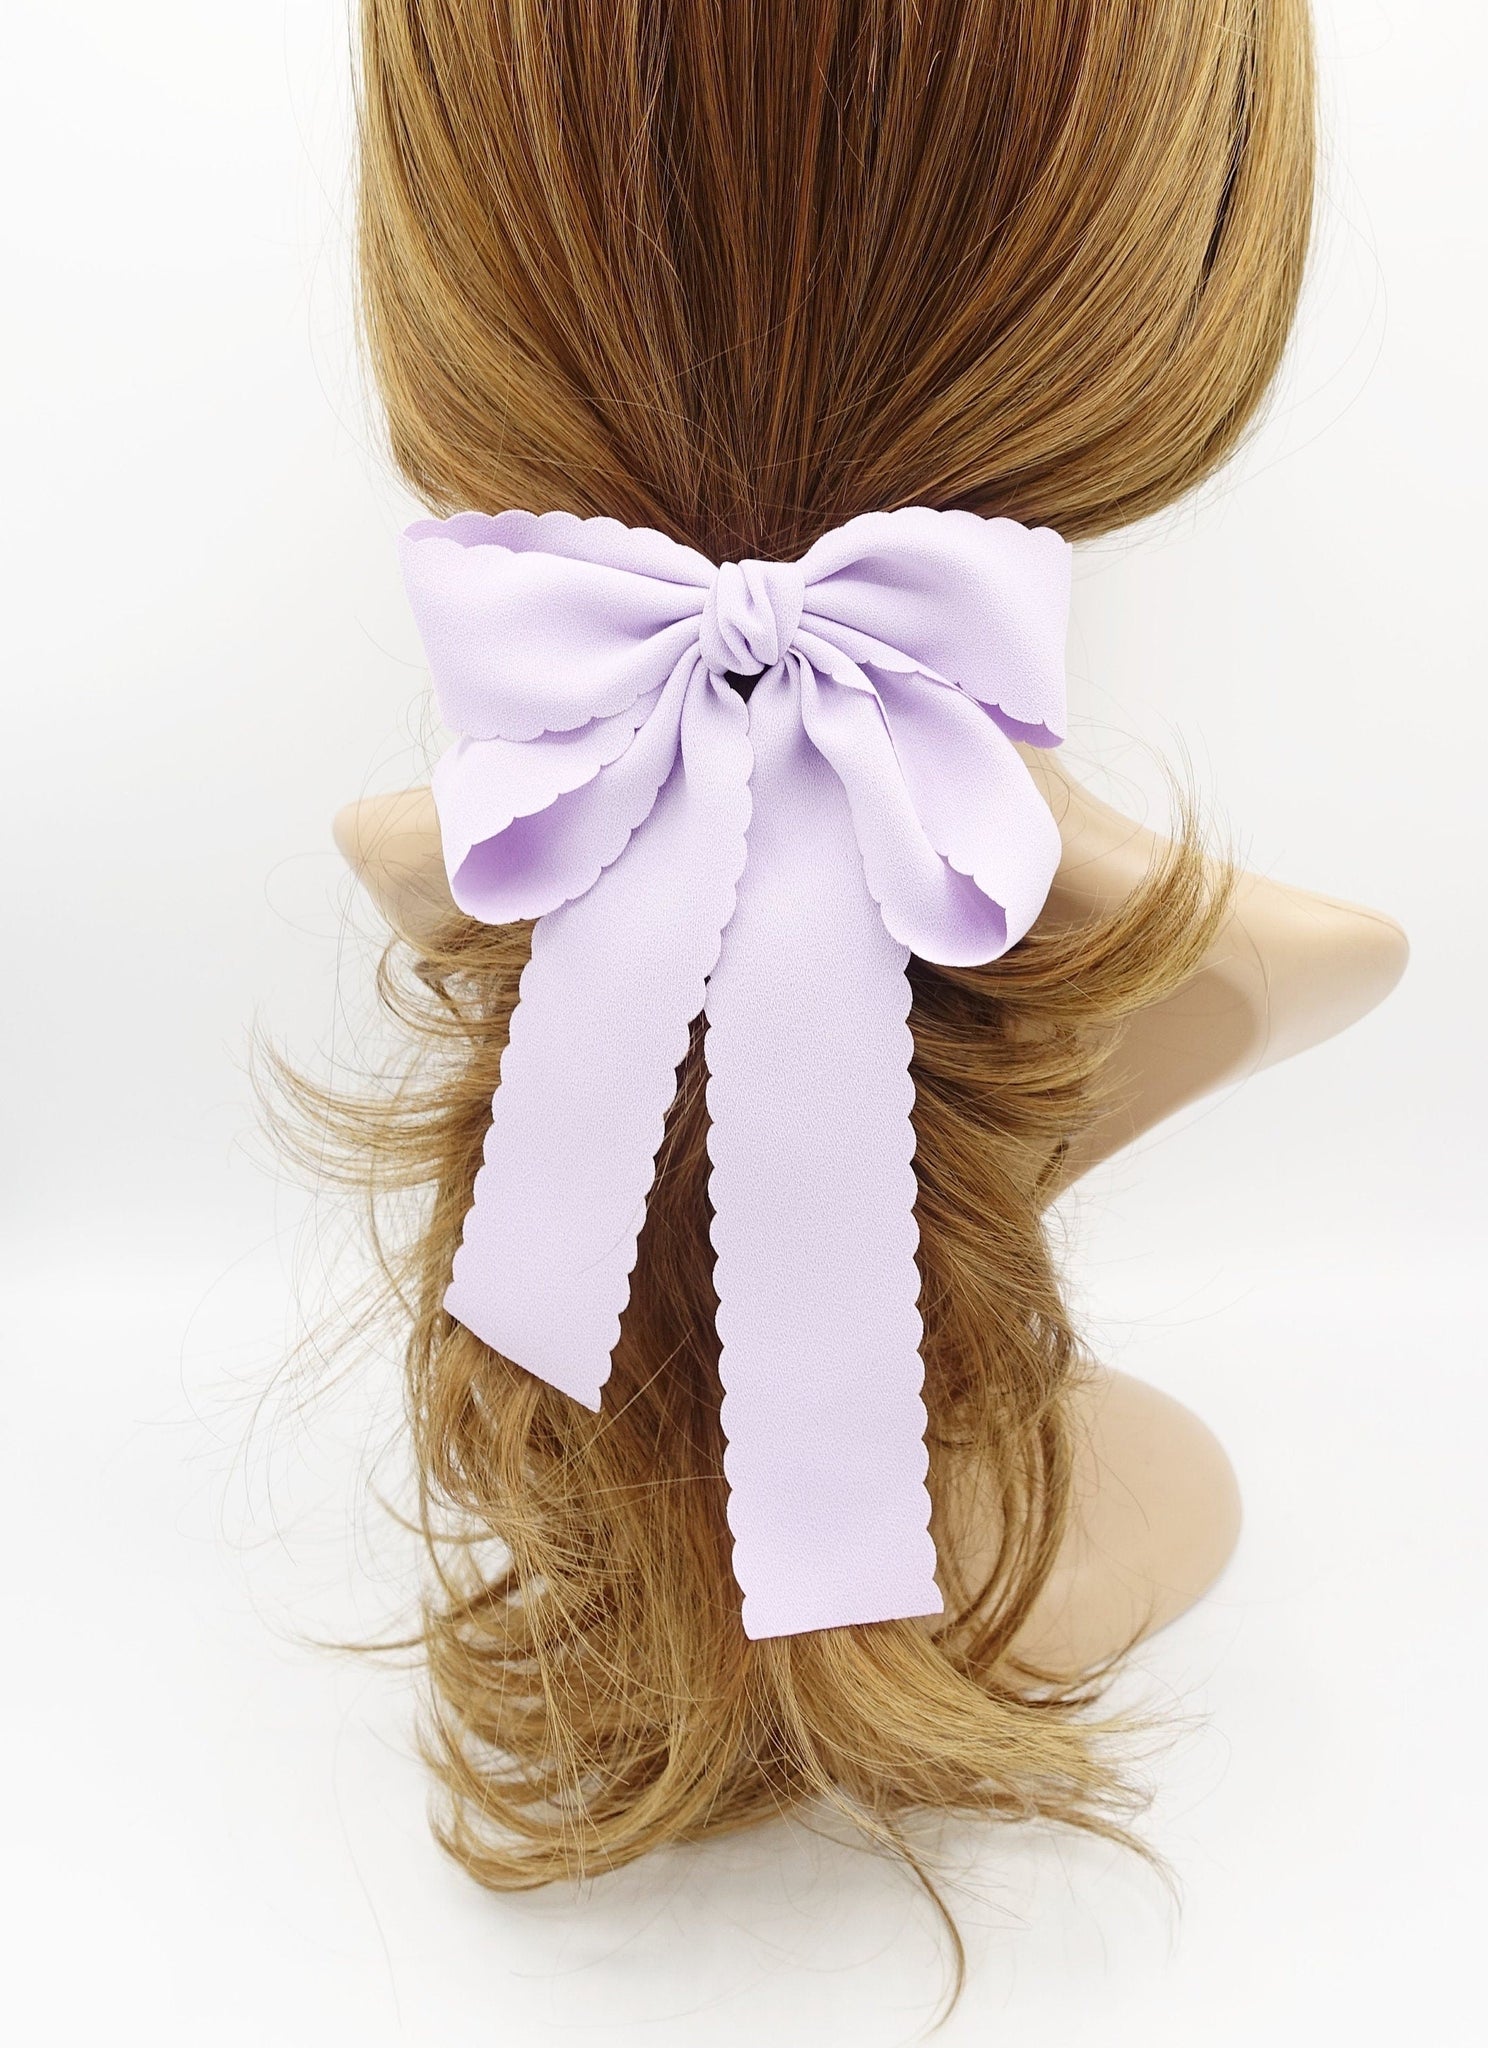 veryshine.com Barrette (Bow) Light purple wave edge hair bow long tail hair barrette women hair accessory